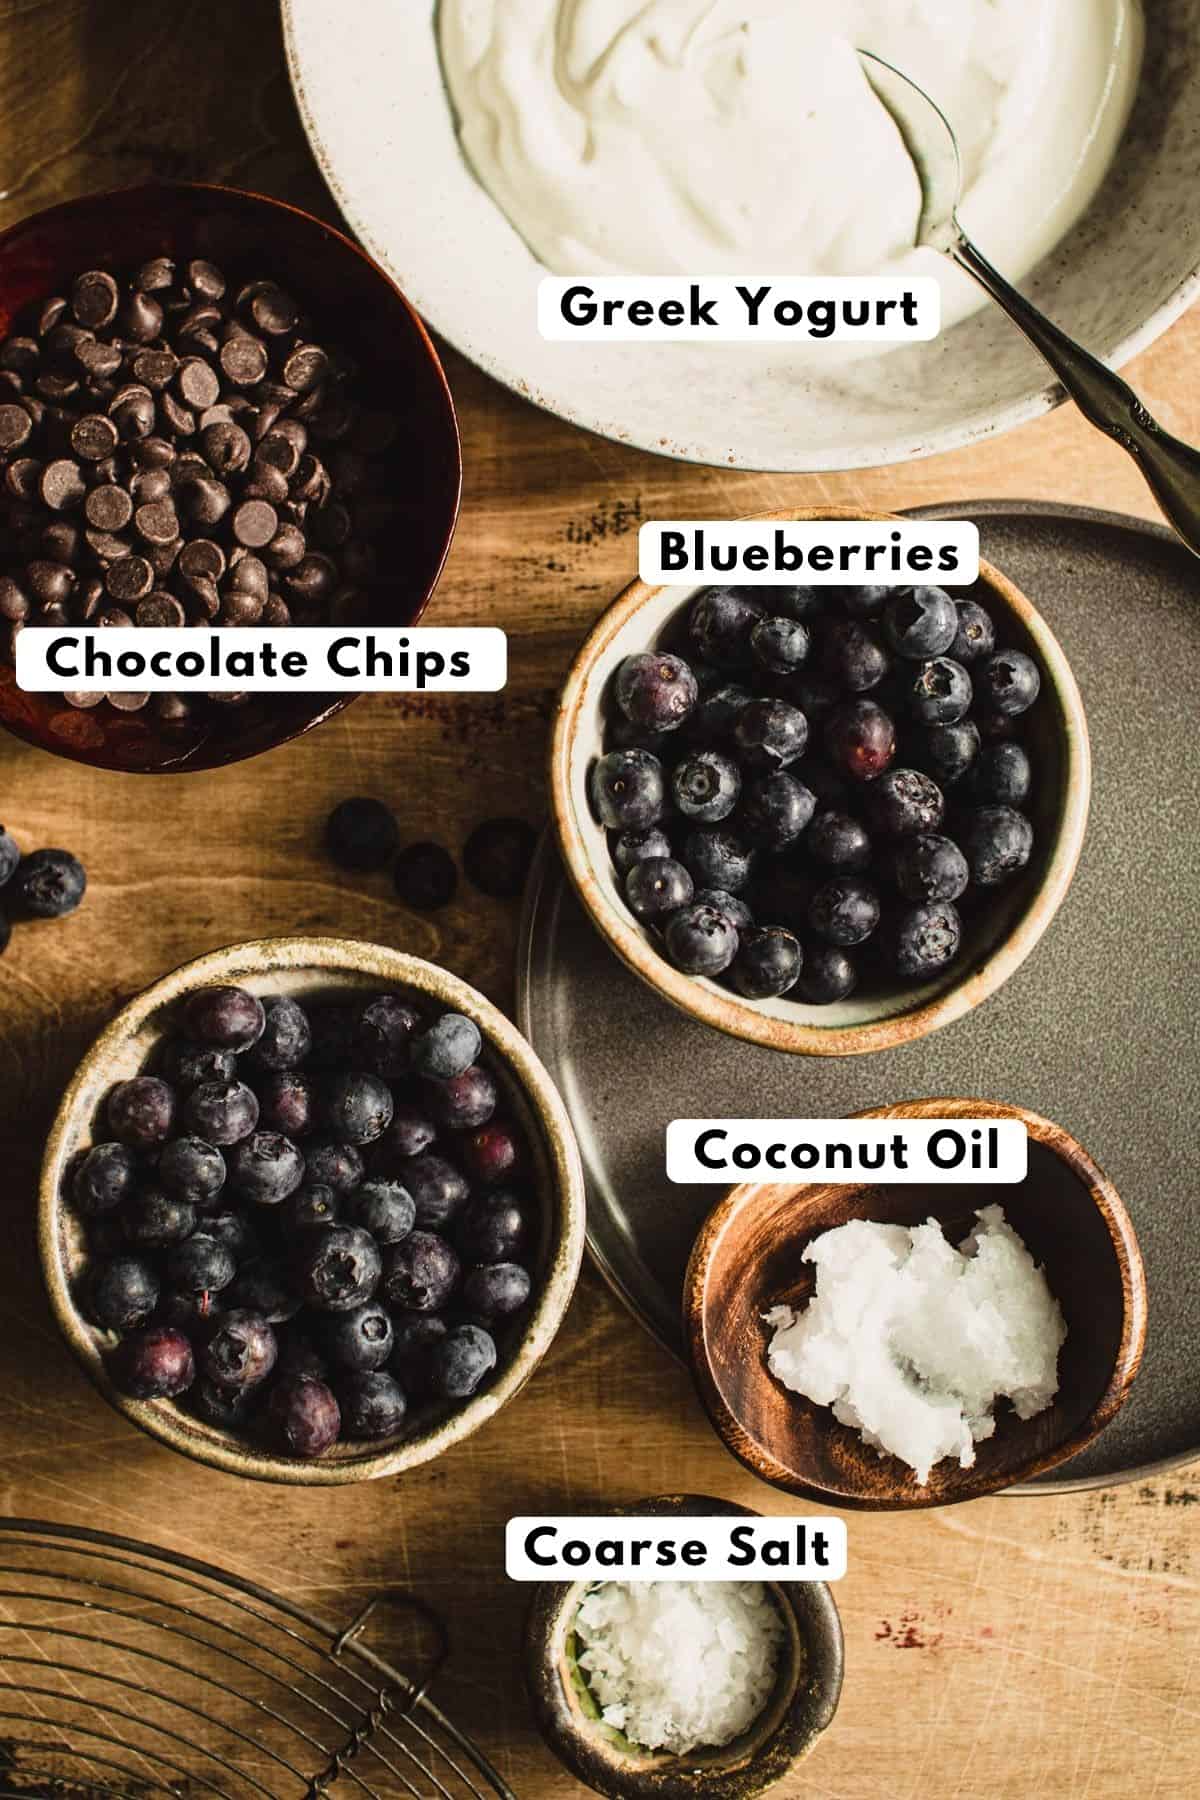 Chocolate covered blueberries ingredients.